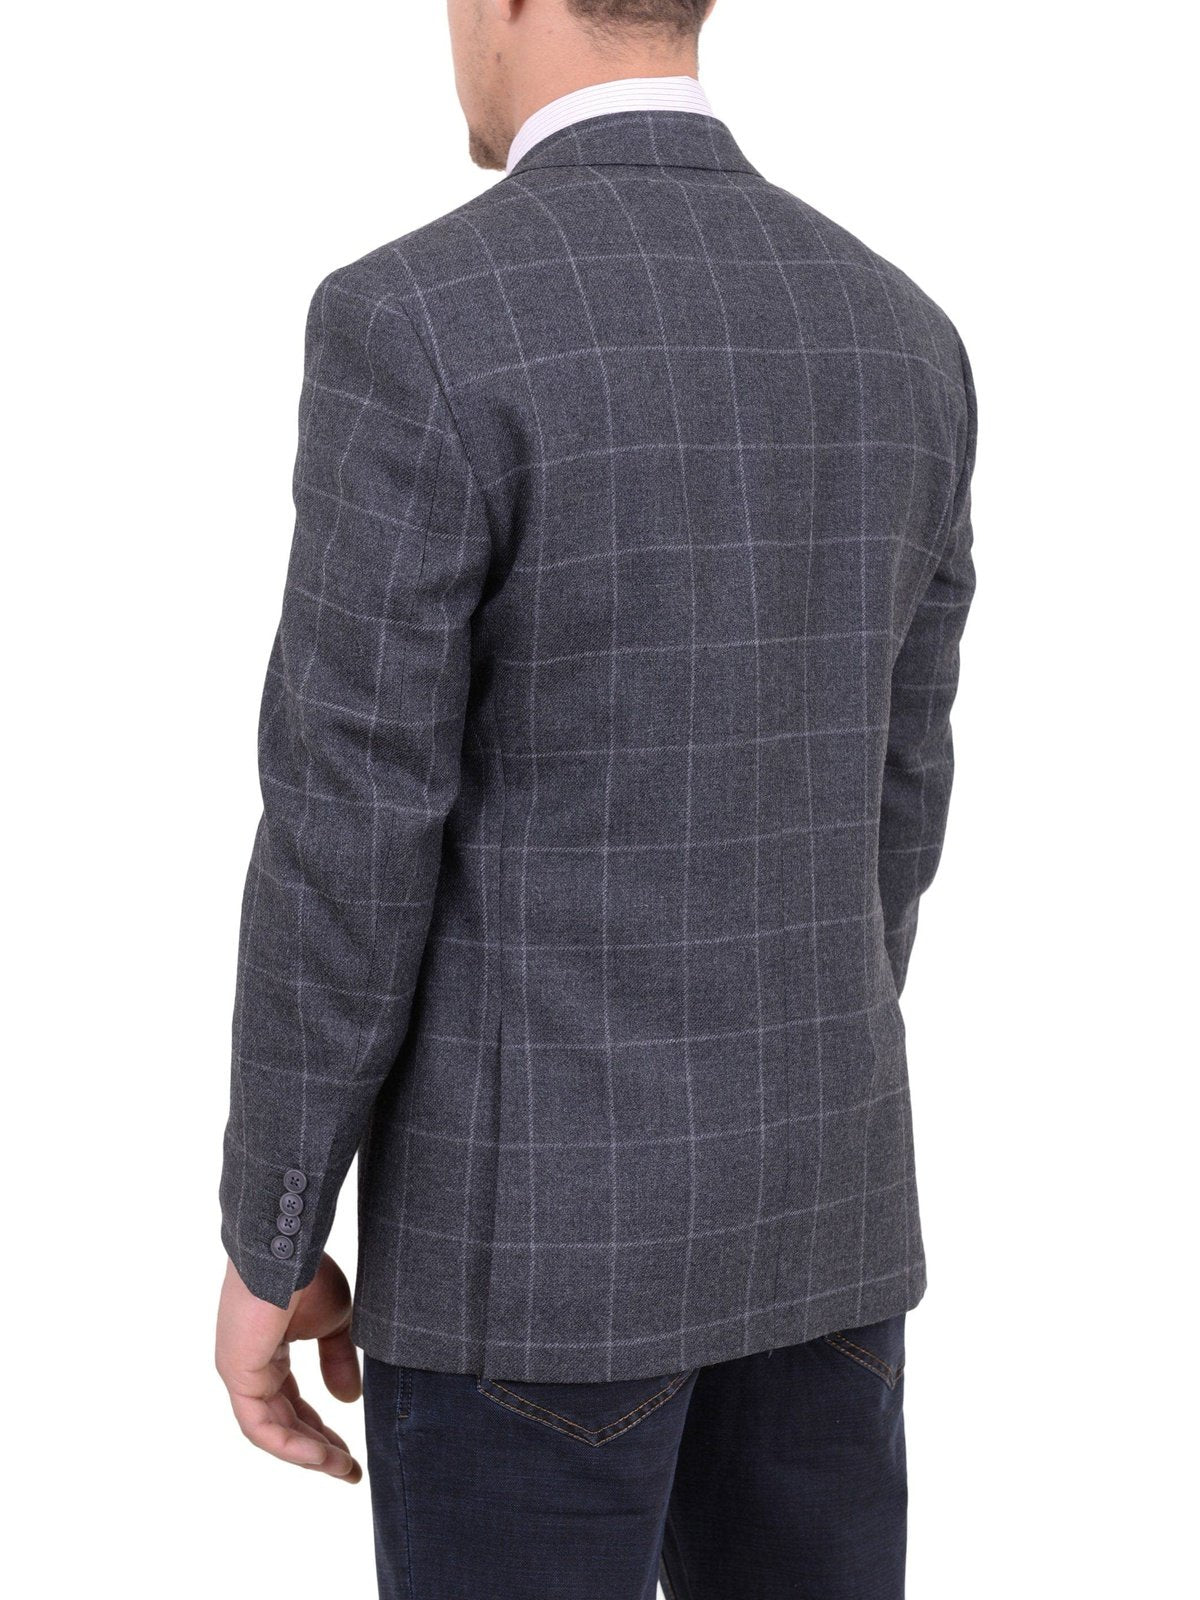 I Uomo Classic Fit Gray Windowpane Flannel Wool Blazer Sportcoat - The Suit Depot